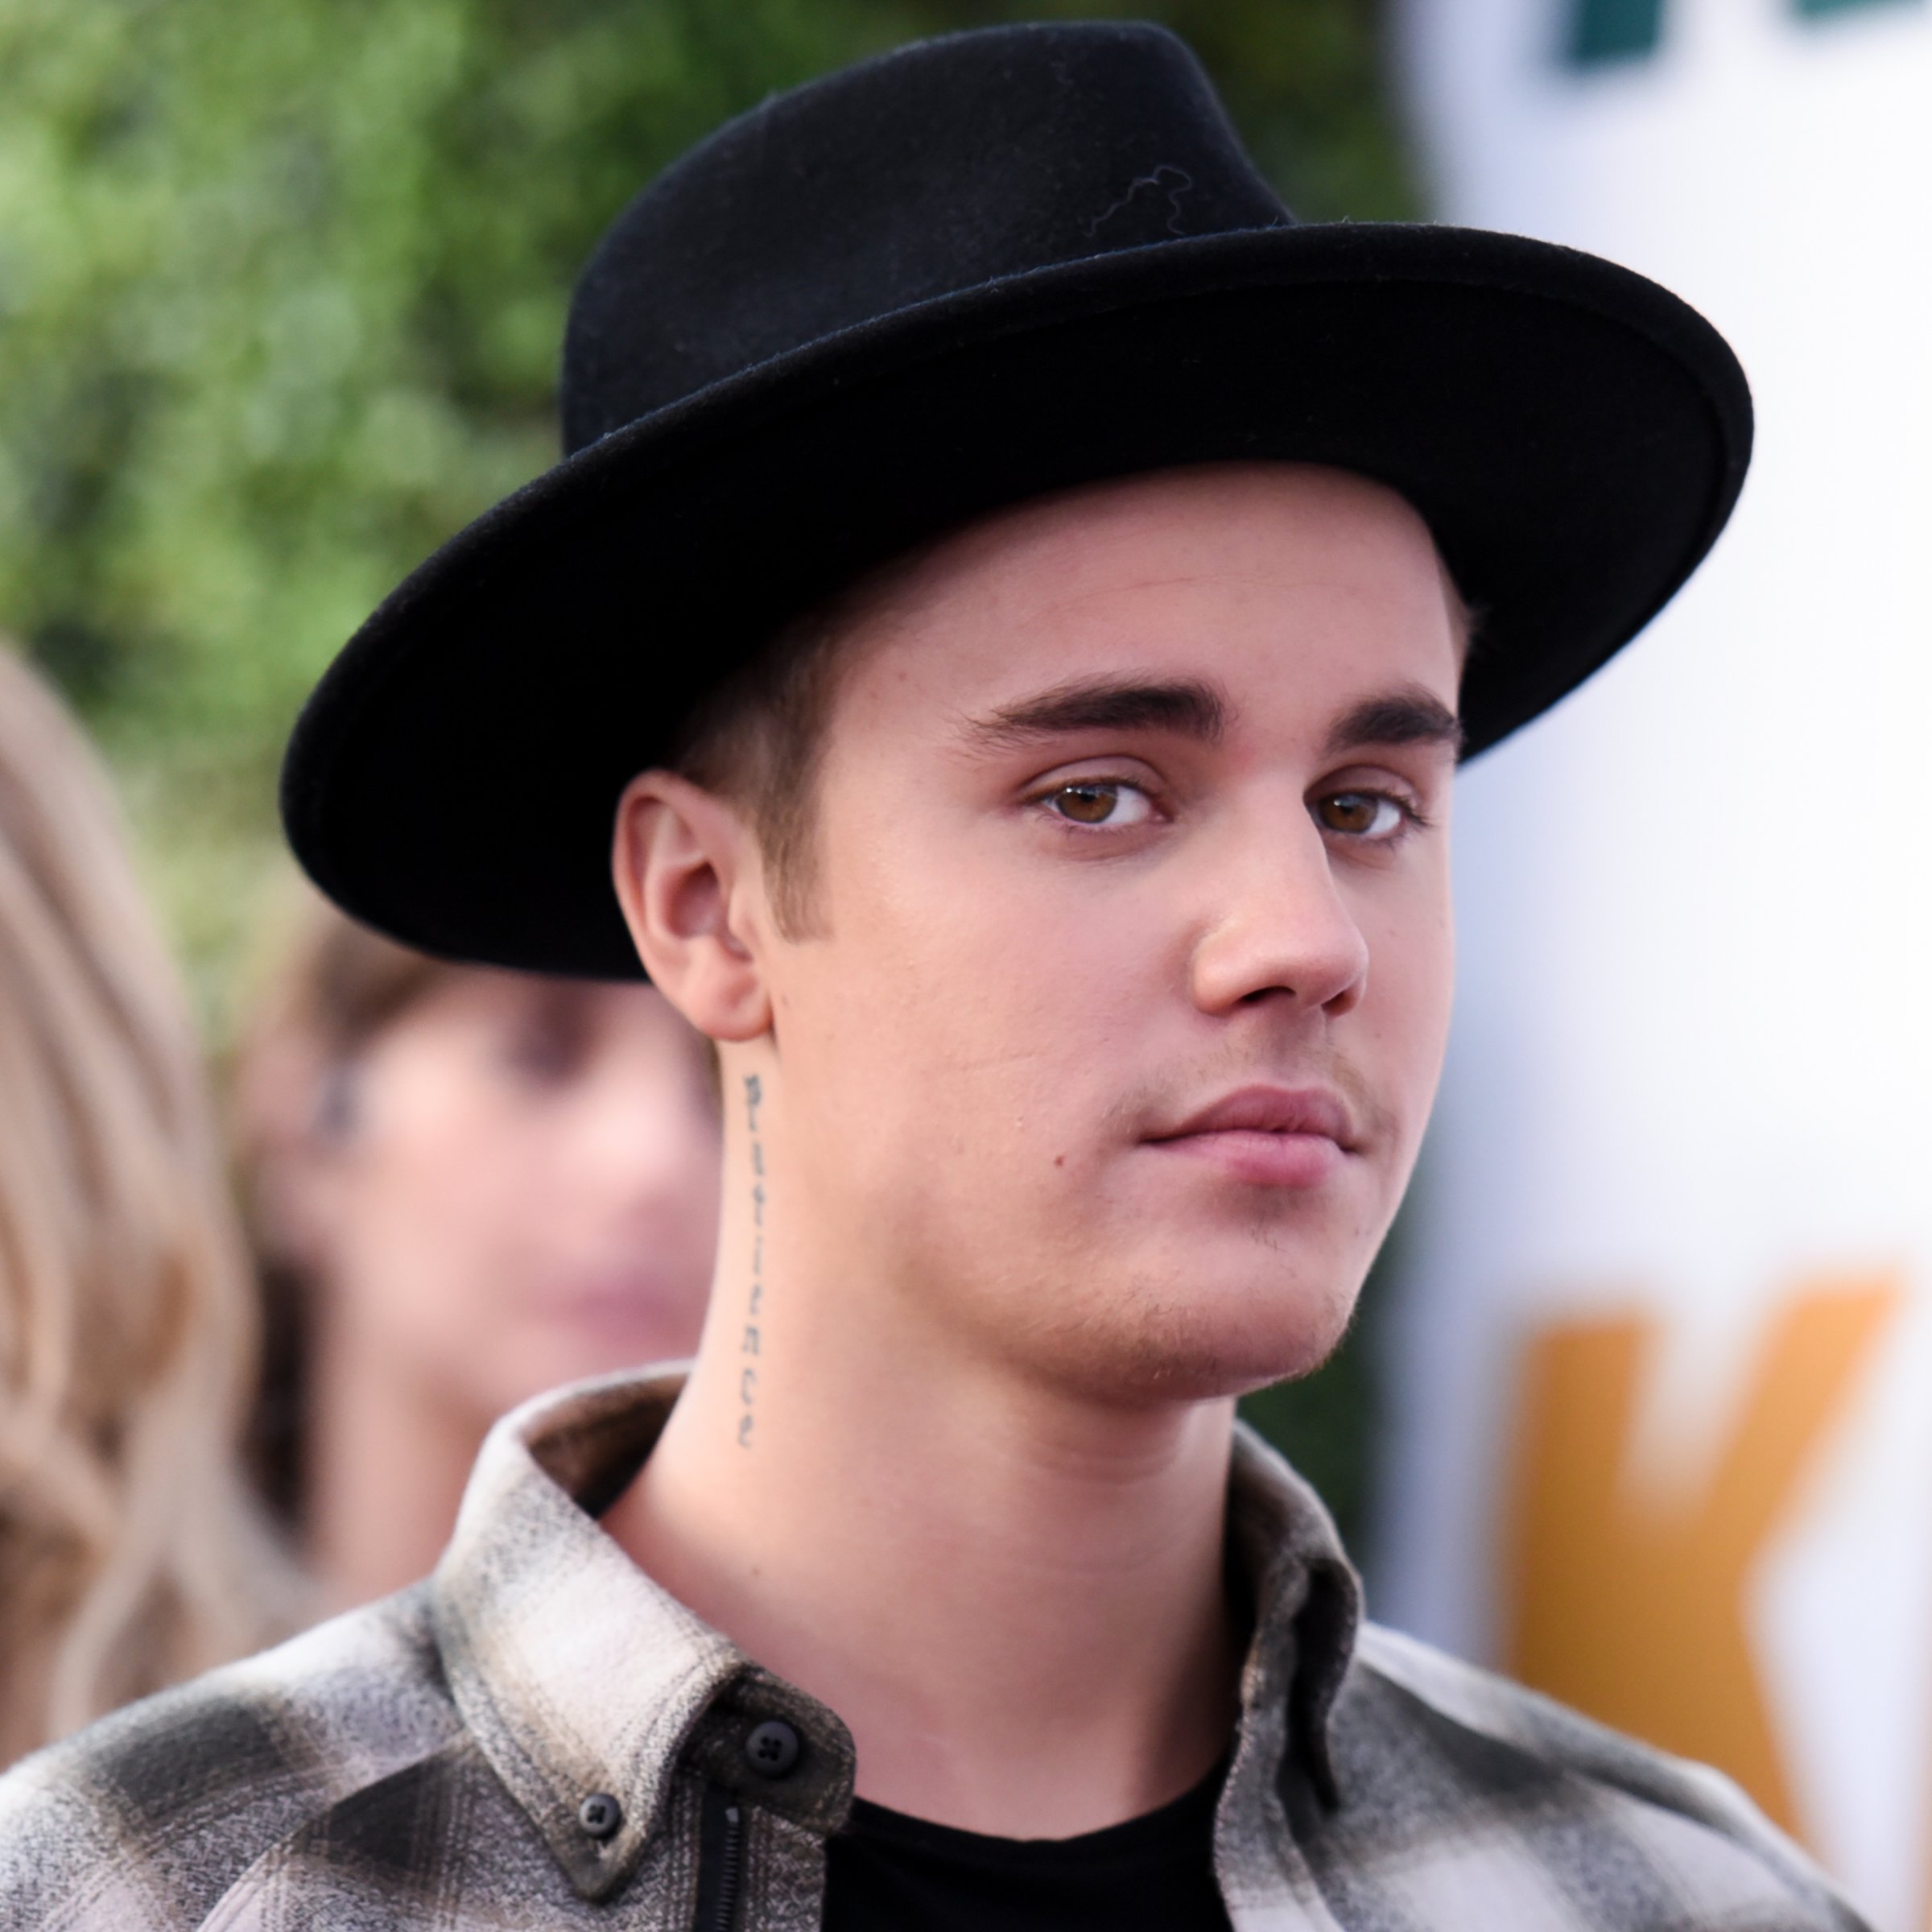 Justin Bieber arrives at Wango Tango 2015 held at StubHub Center on May 9, 2015, in Carson, Calif.